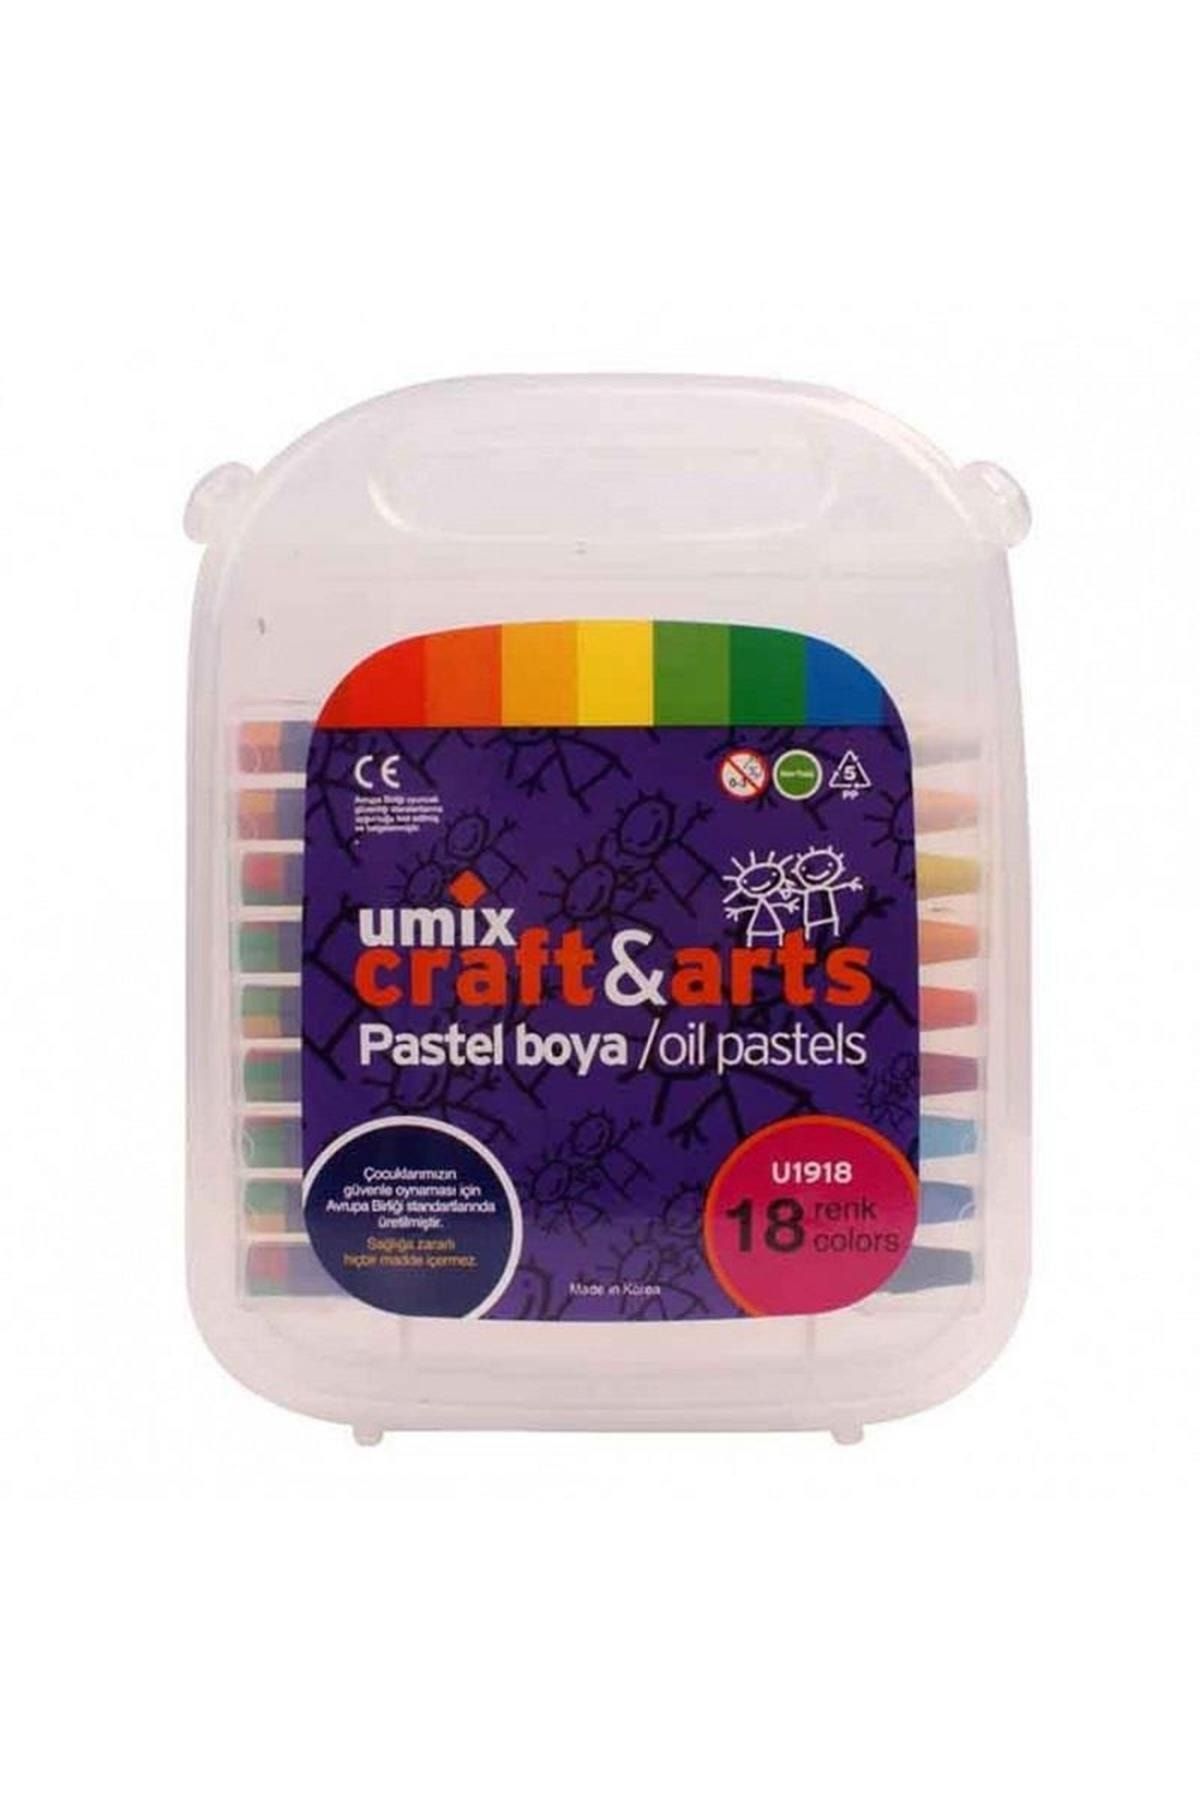 Genel Markalar Marka: Umix 18 Renk Pastel Boya U1918 Kategori: Sulu Boya